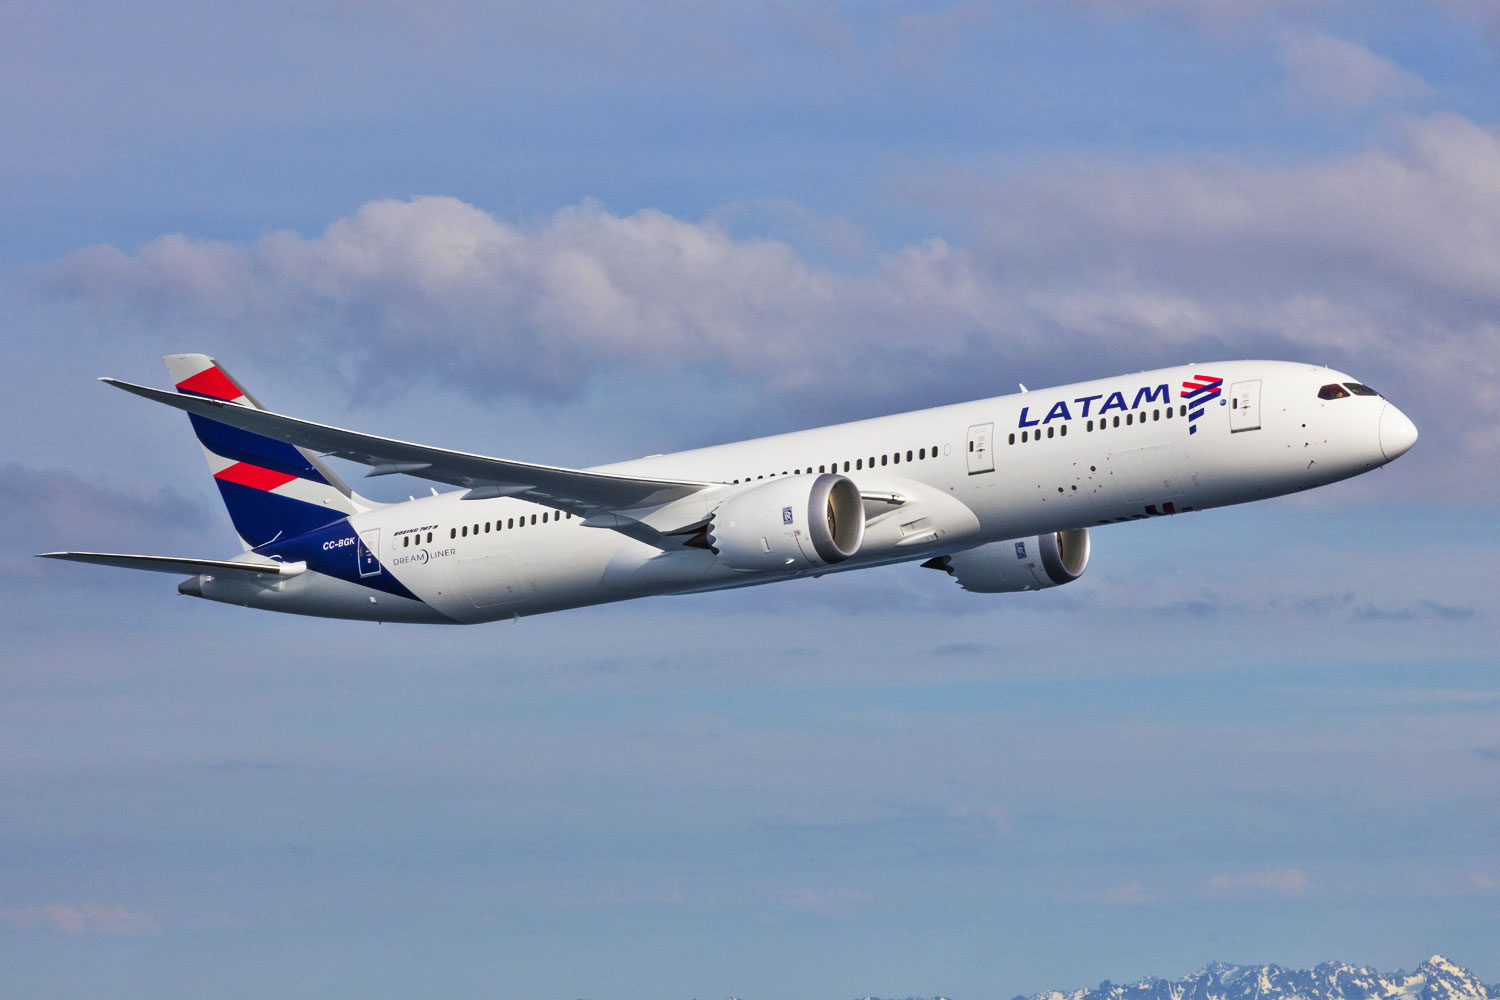 LATAM Brasil will debut the Boeing 787 in December - Air Data News